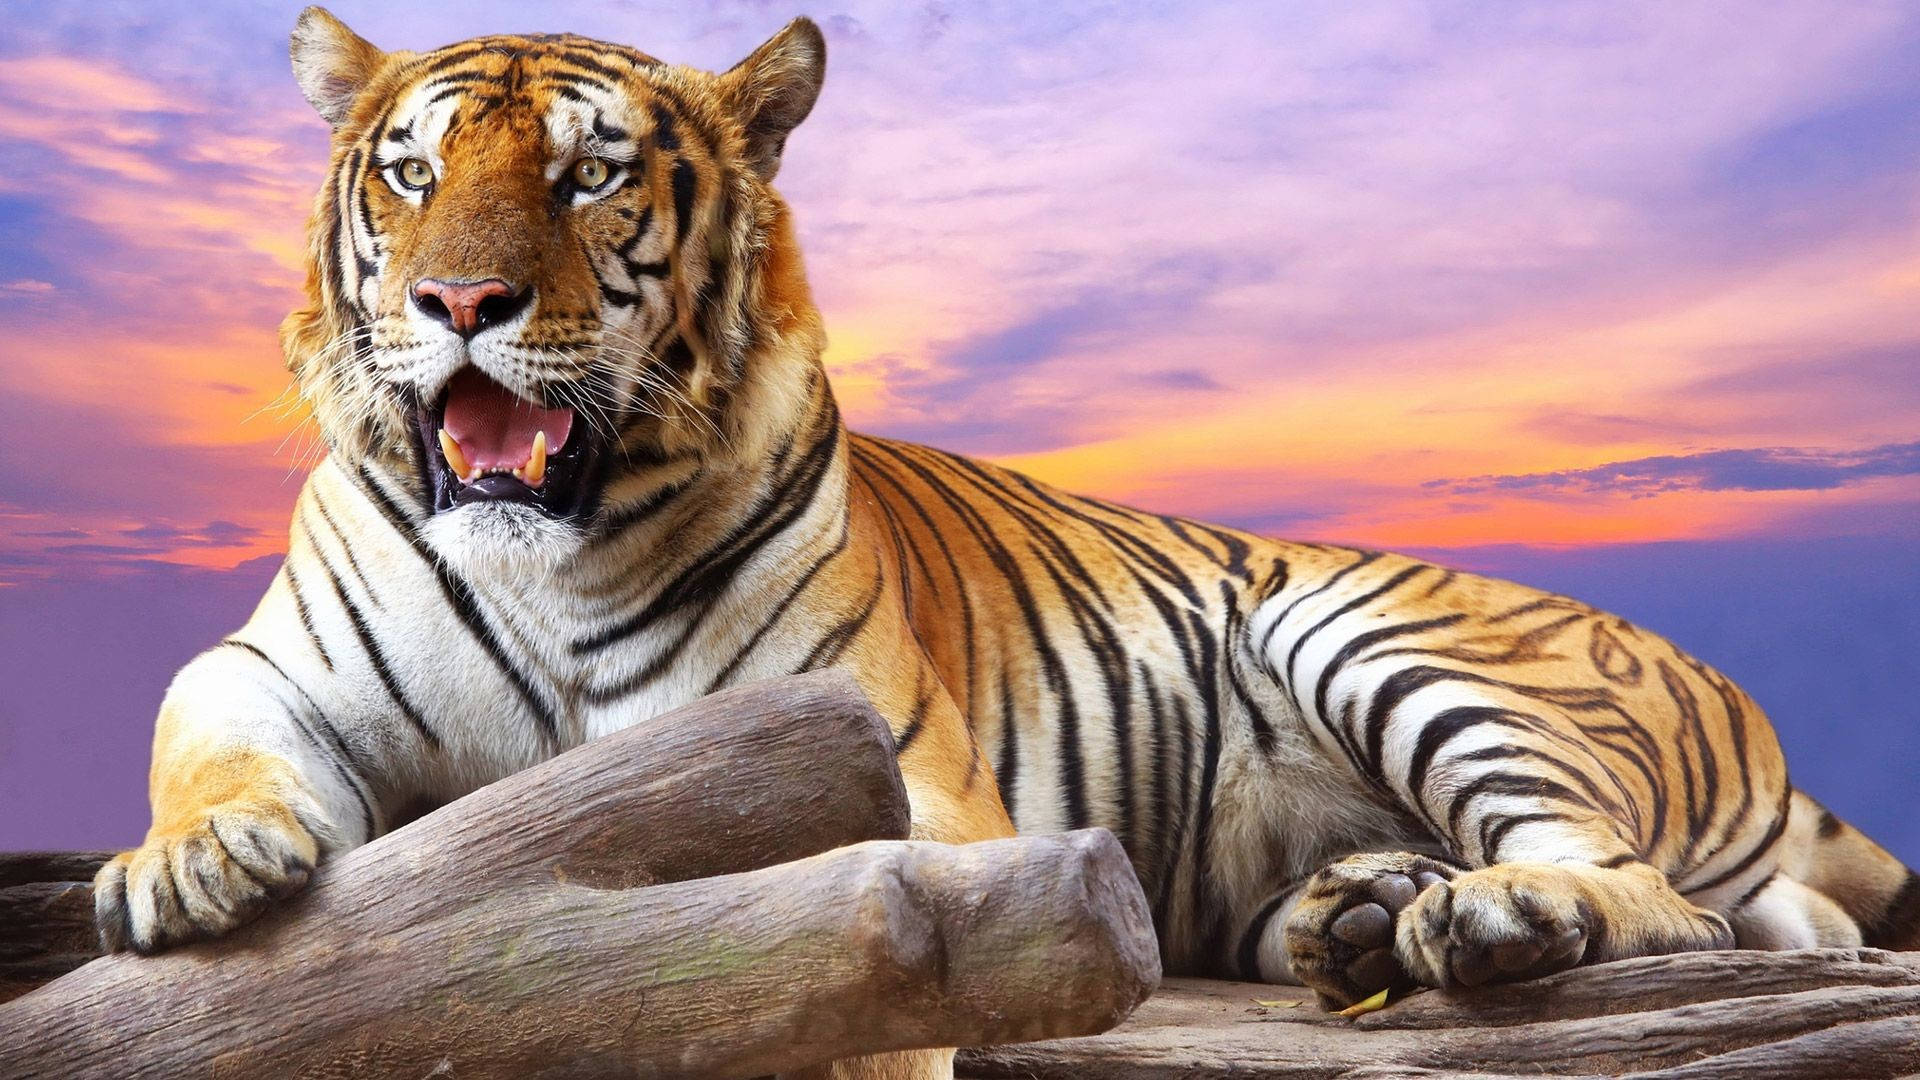 Tiger Sunset Background Wallpaper